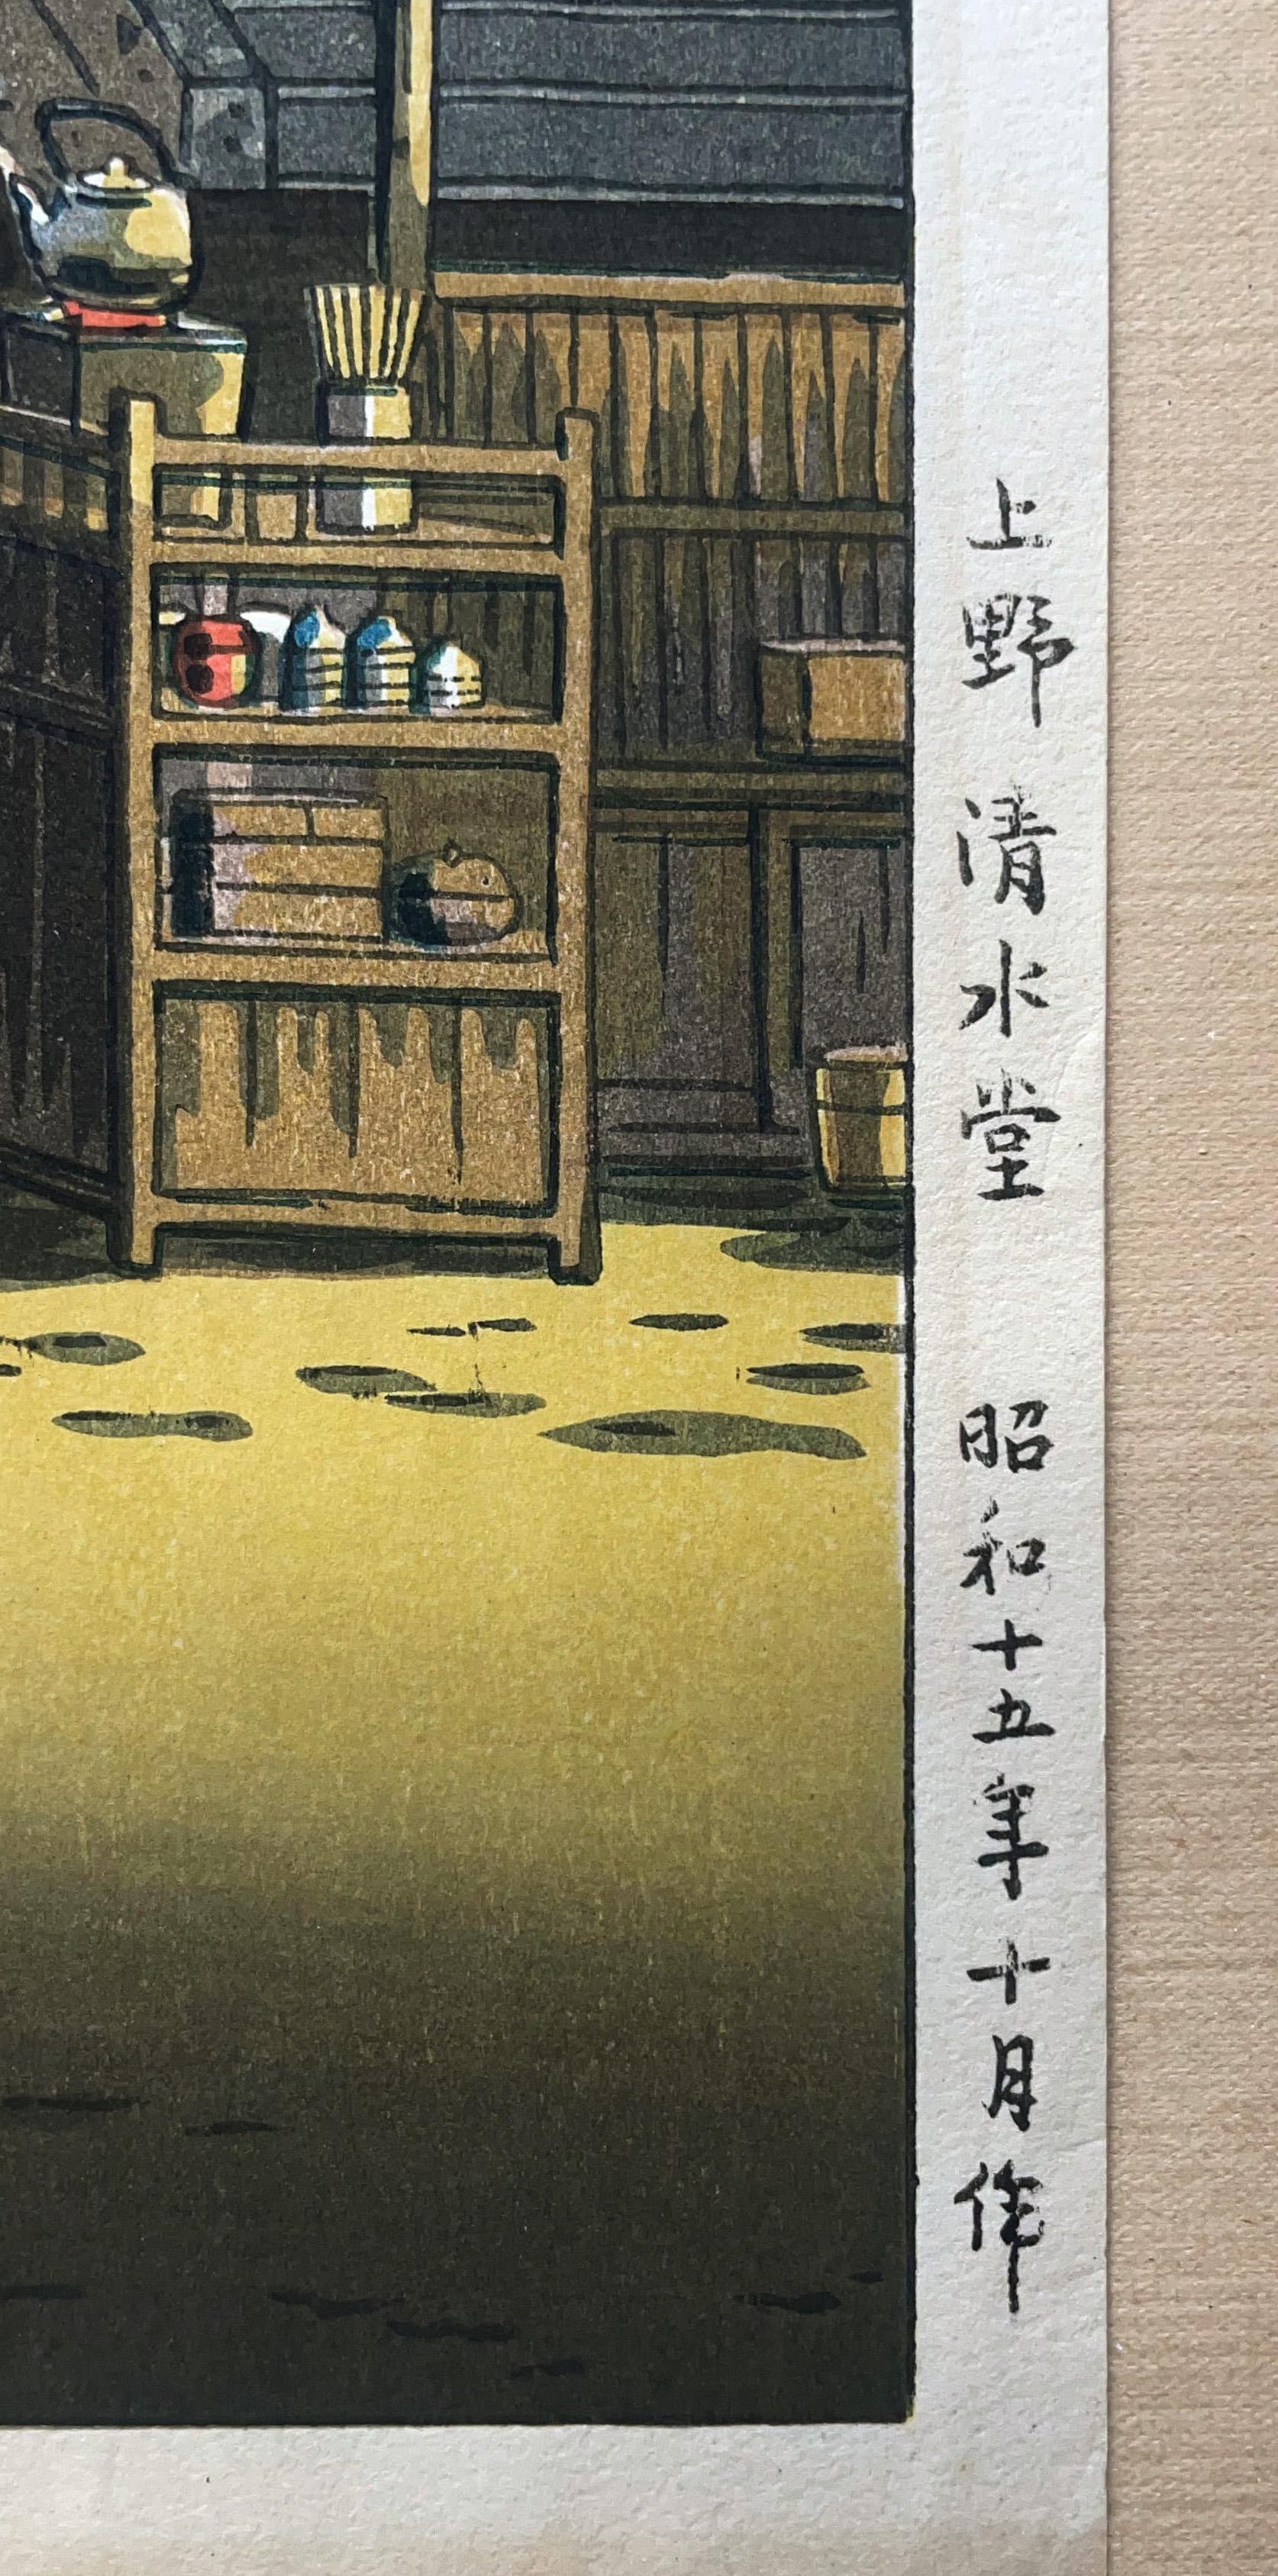 Tea Shop at Kiyomizu (Early Printing) - Nocturnal Woodblock Print on Paper 10